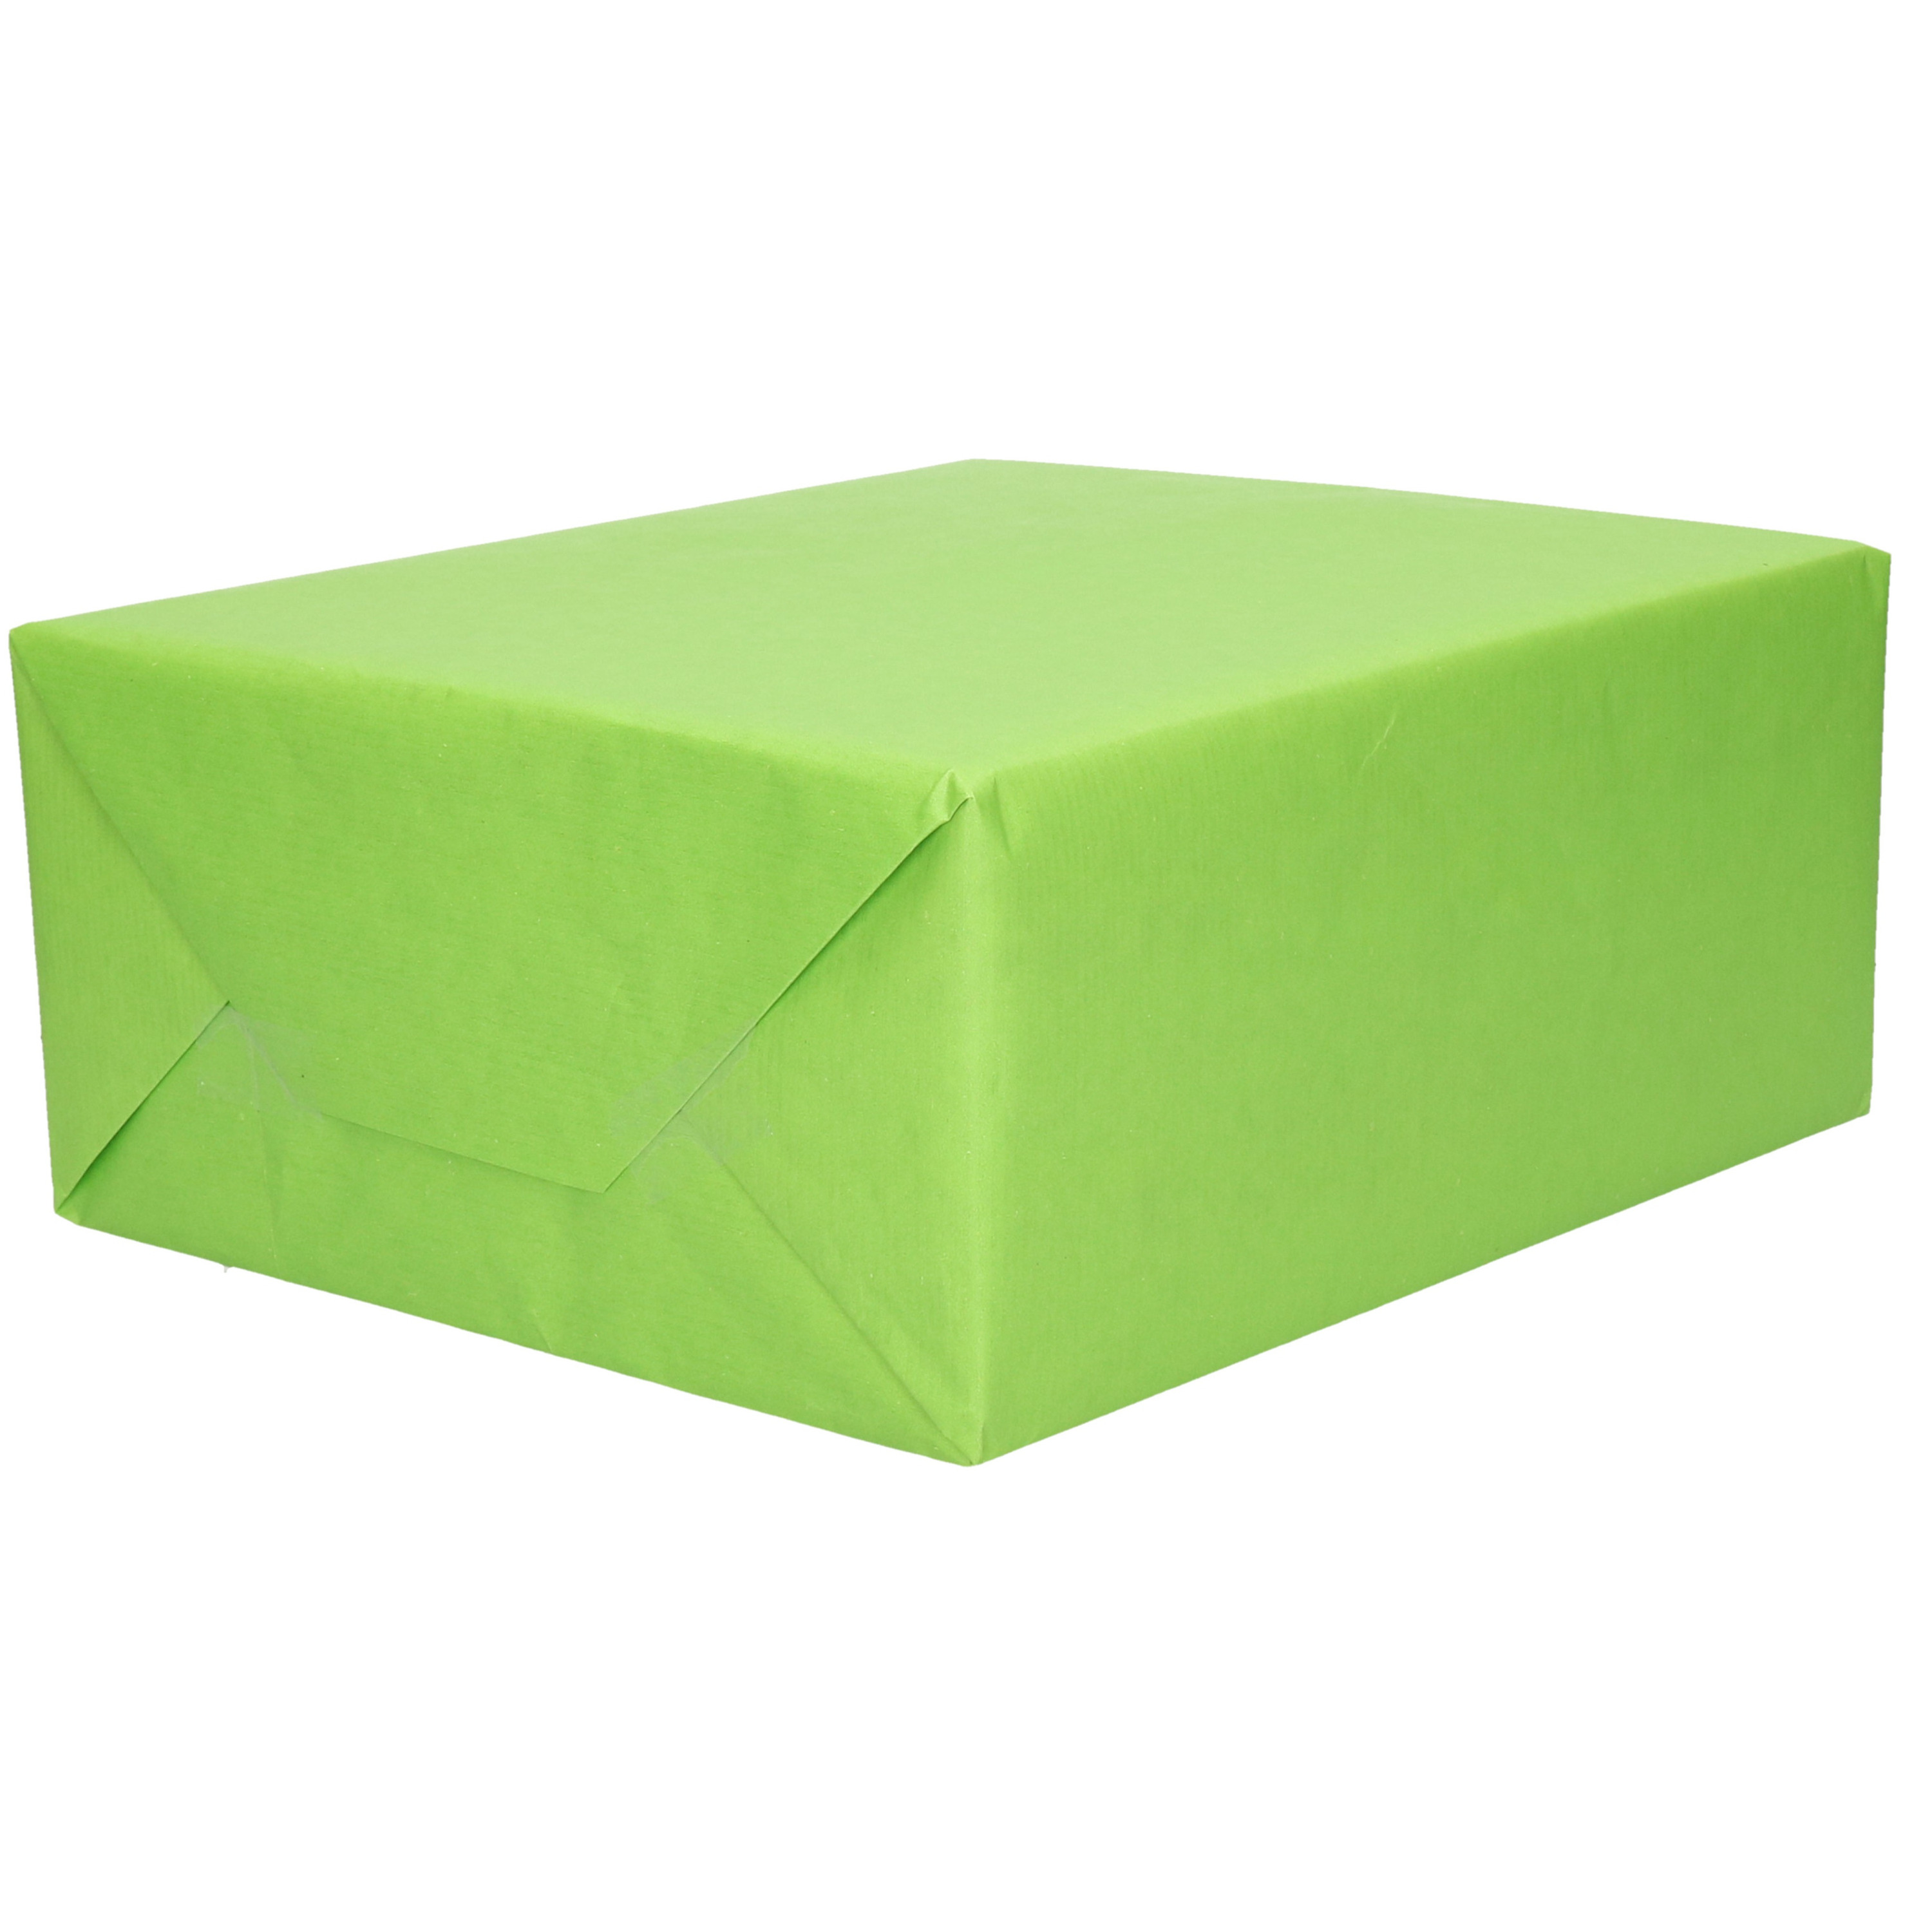 1x Rol kraft inpakpapier groen 200 x 70 cm